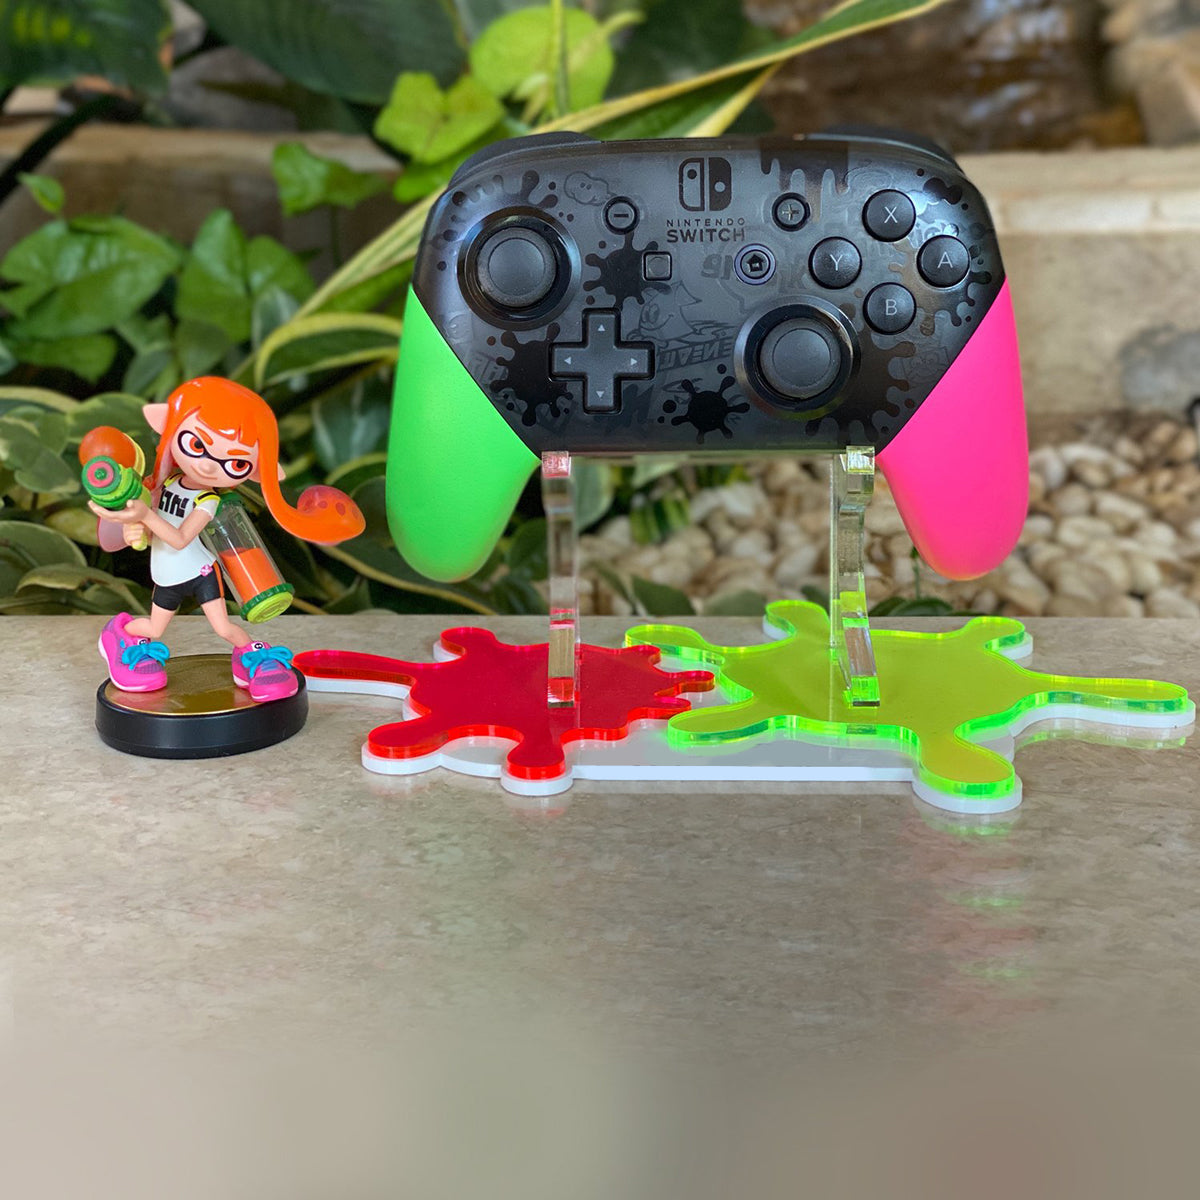 Splatoon 2 Nintendo Display Rose Colored Gaming Pro – Controller Switch